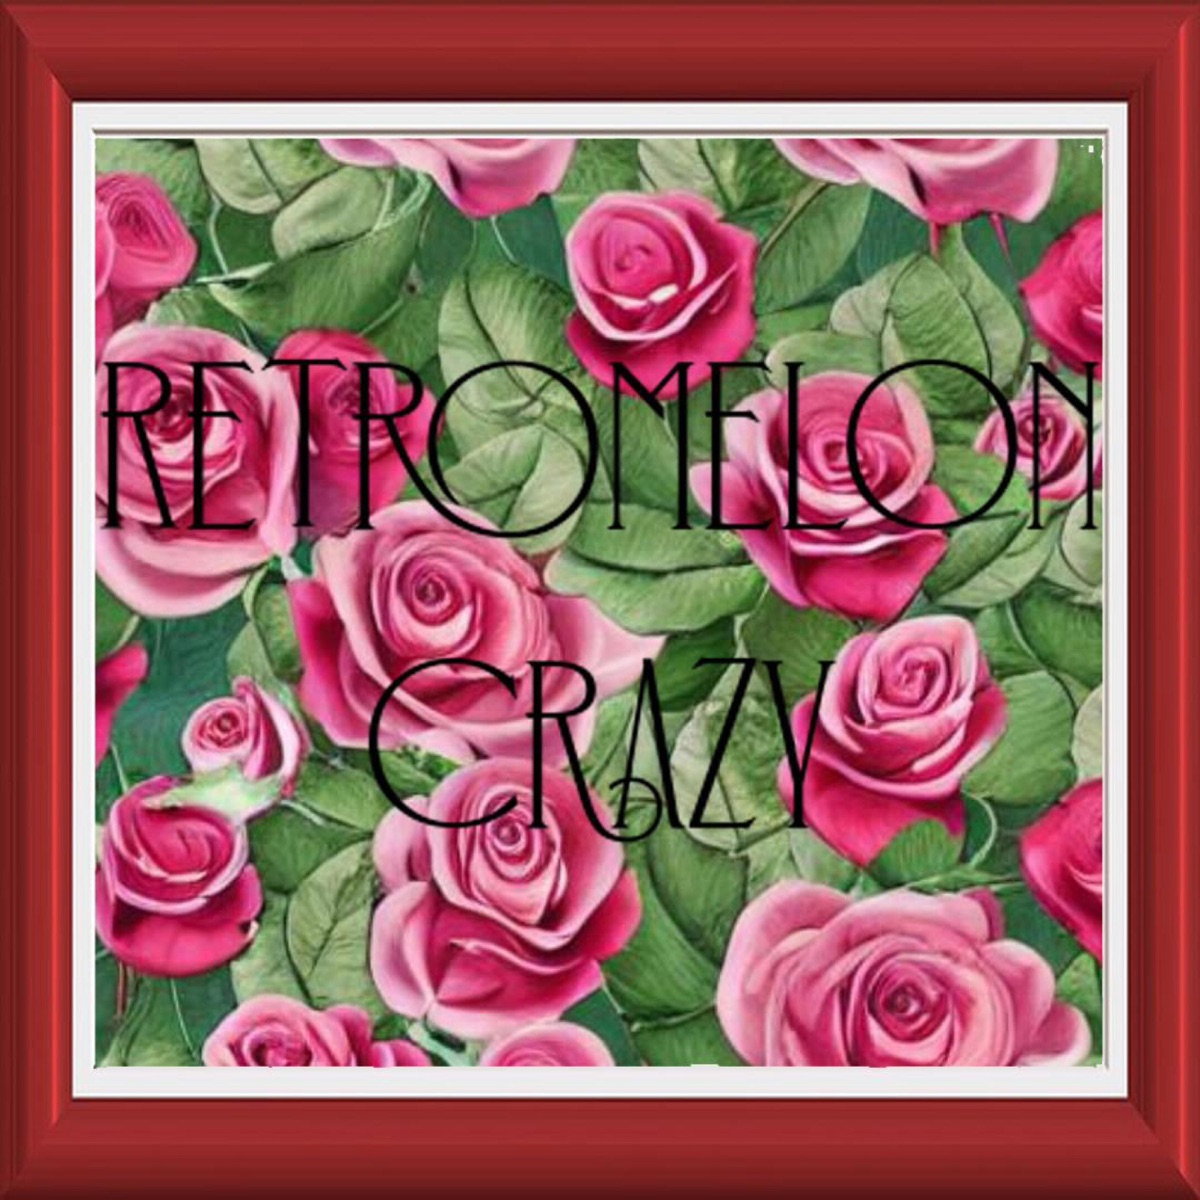 Pink Panther Theme Song (Remix) - Single - Album by Retromelon